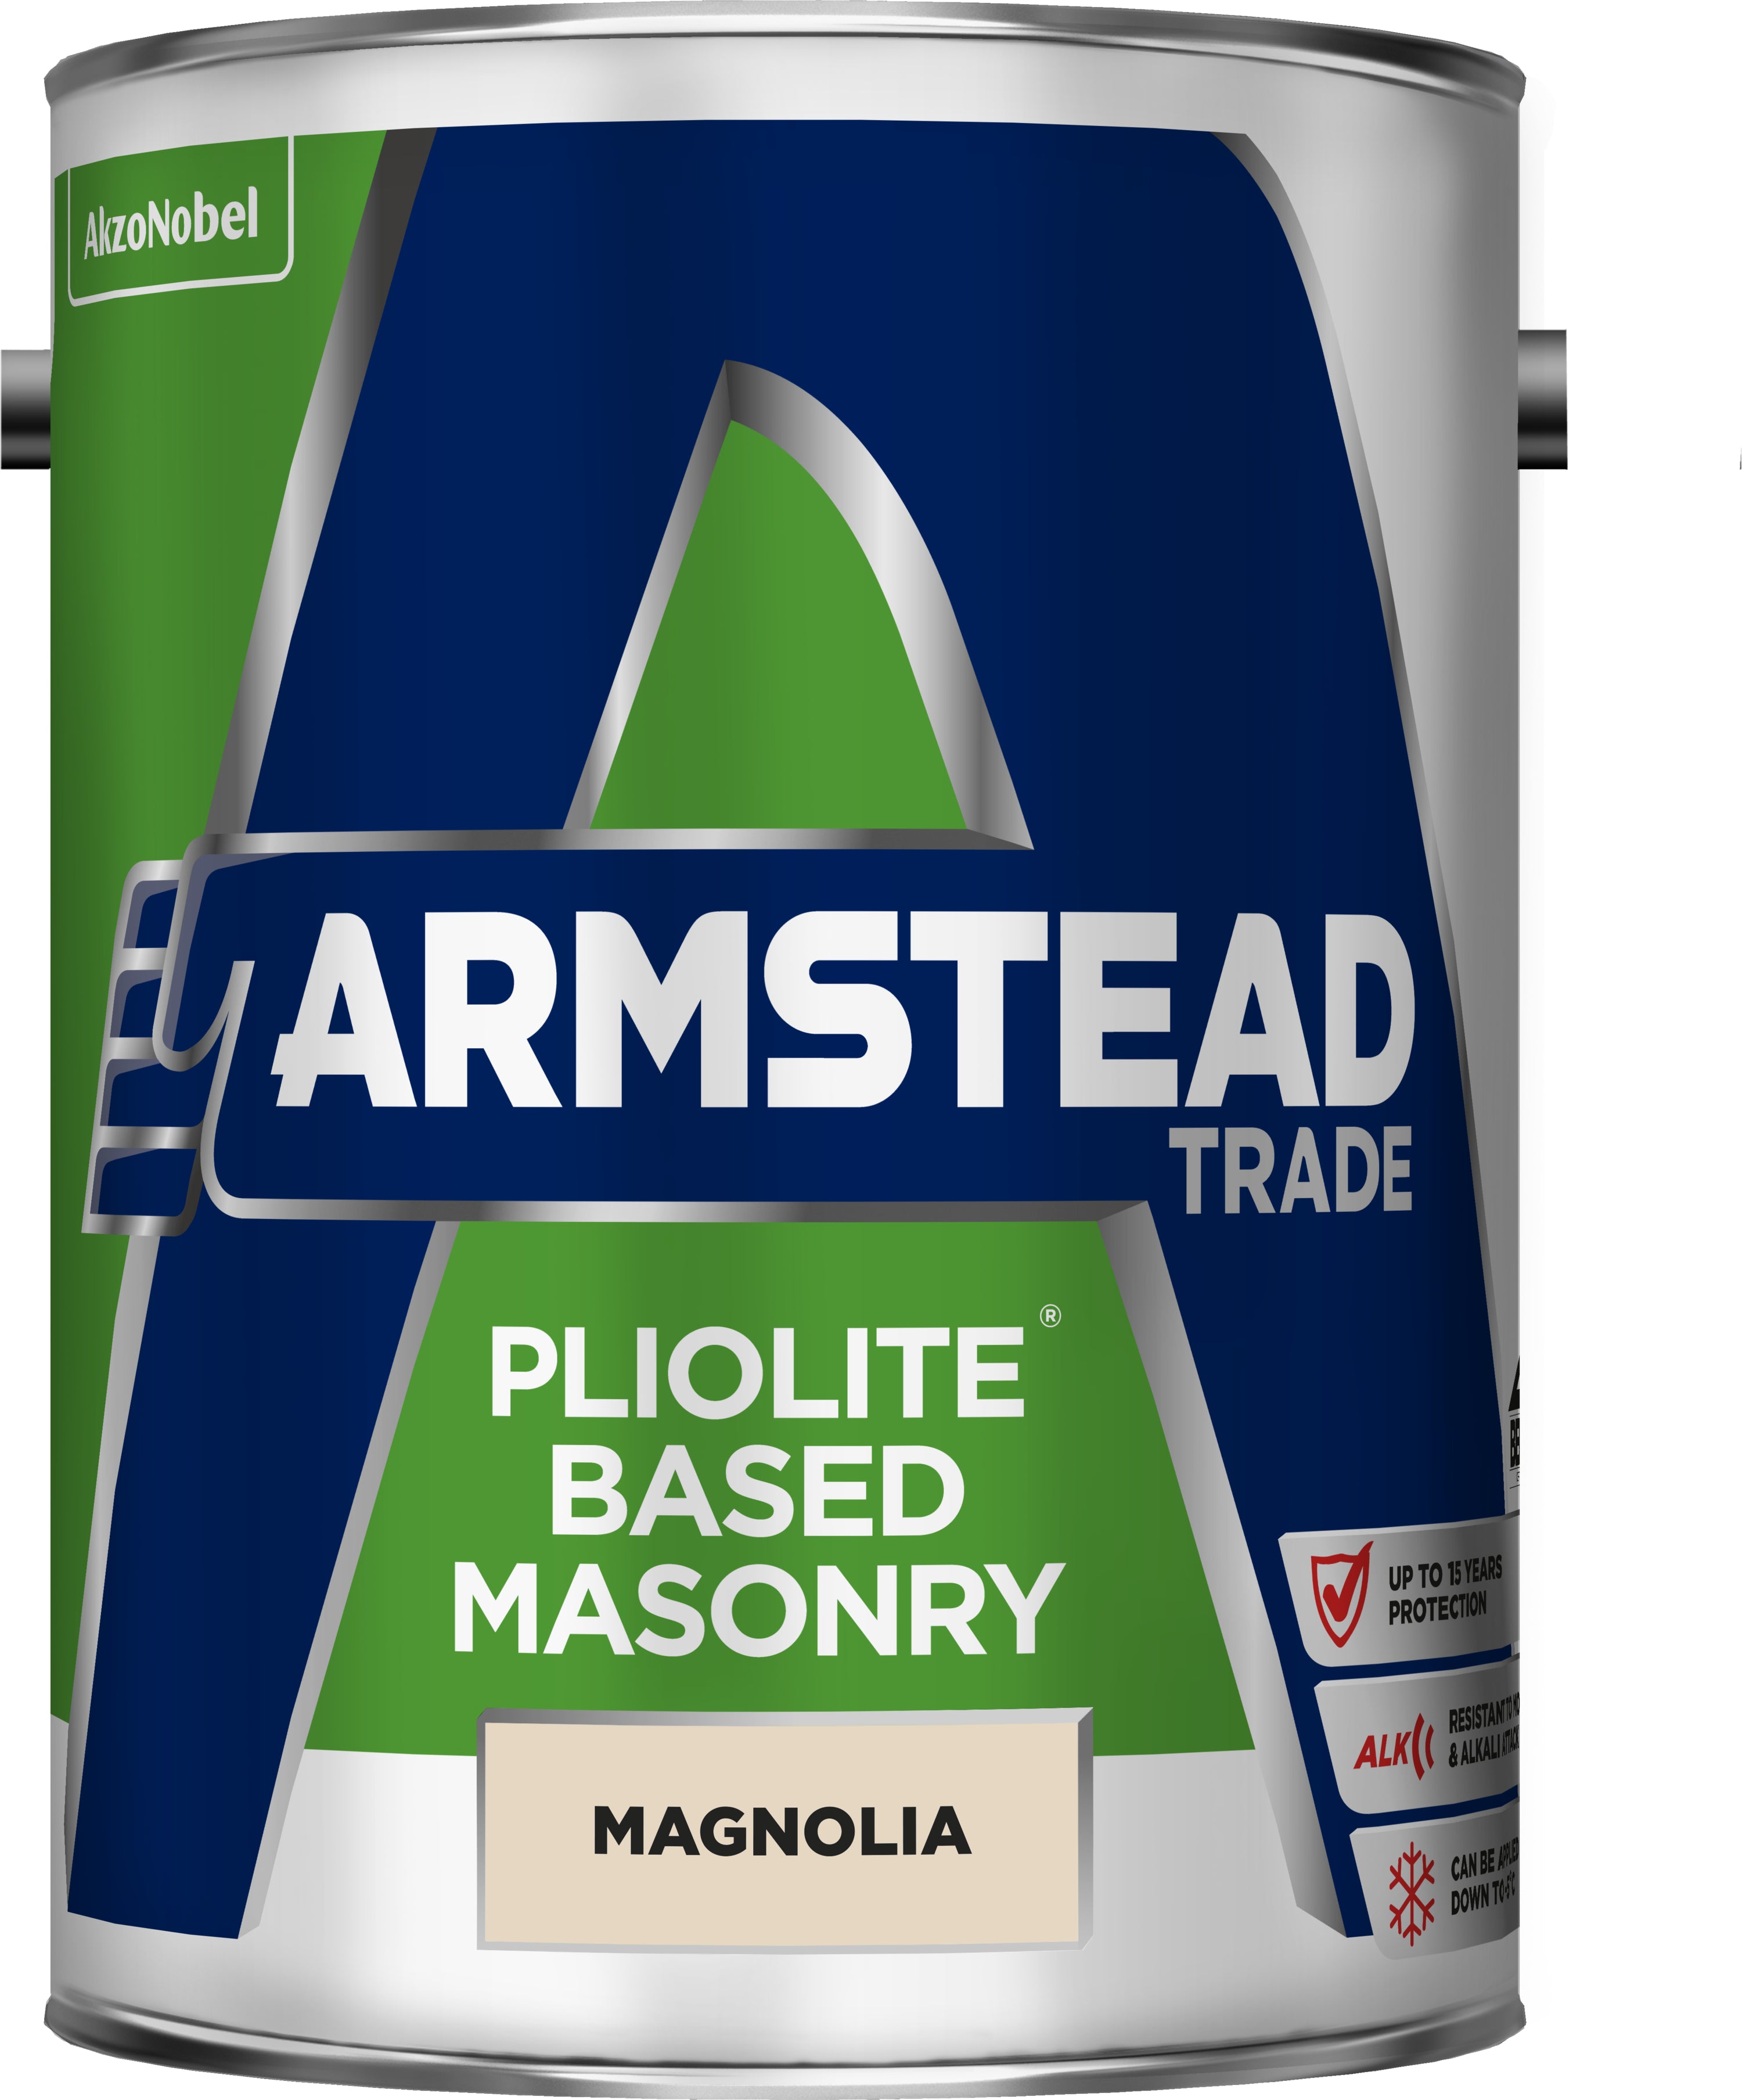 Armstead Trade Pliolite Masonry Magnolia 5L